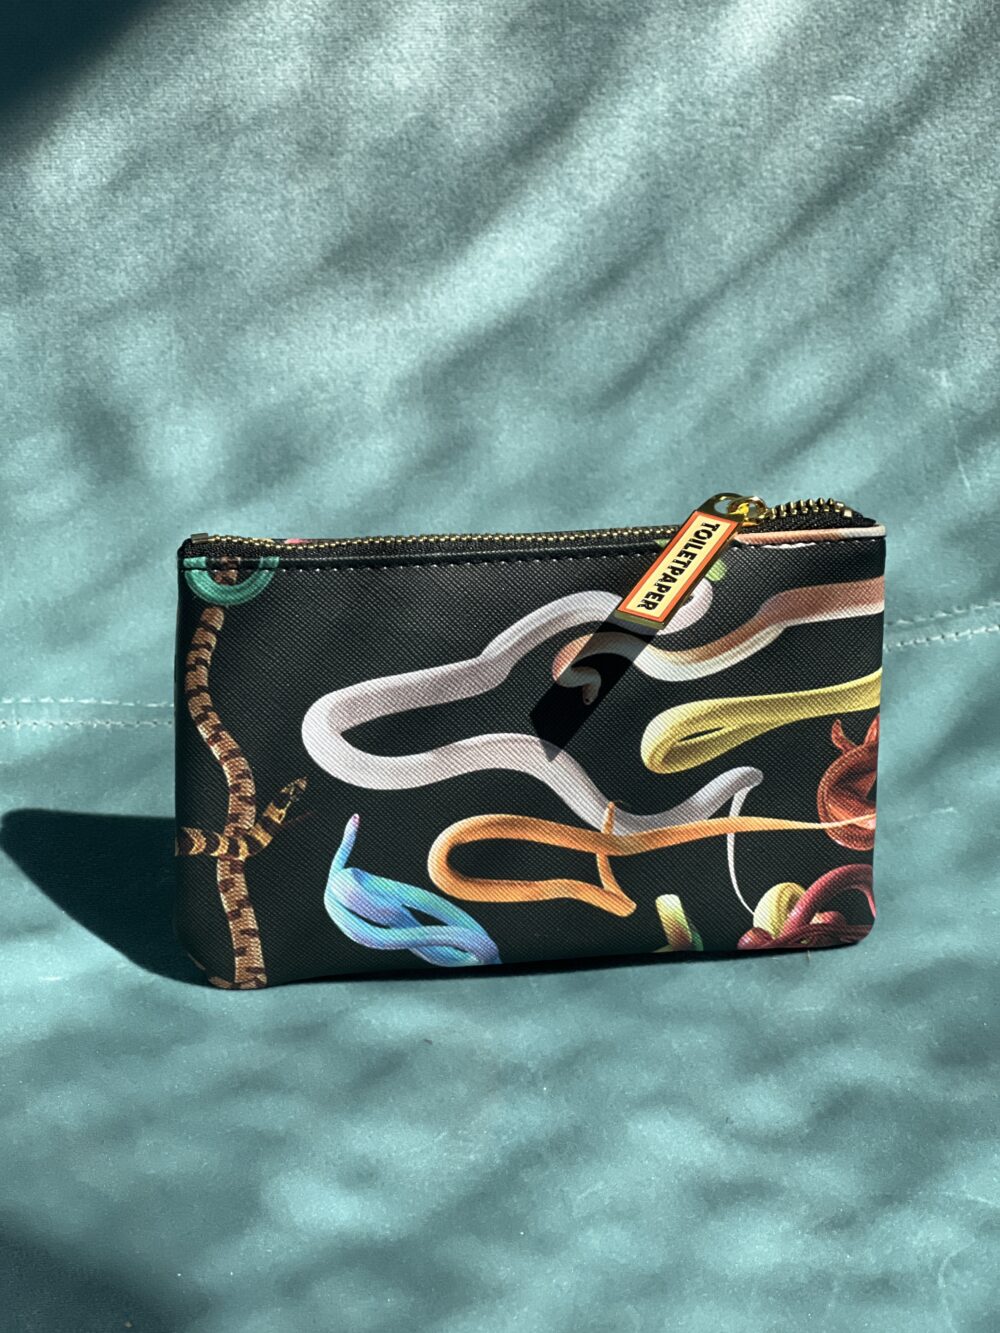 Seletti snakes coin purse